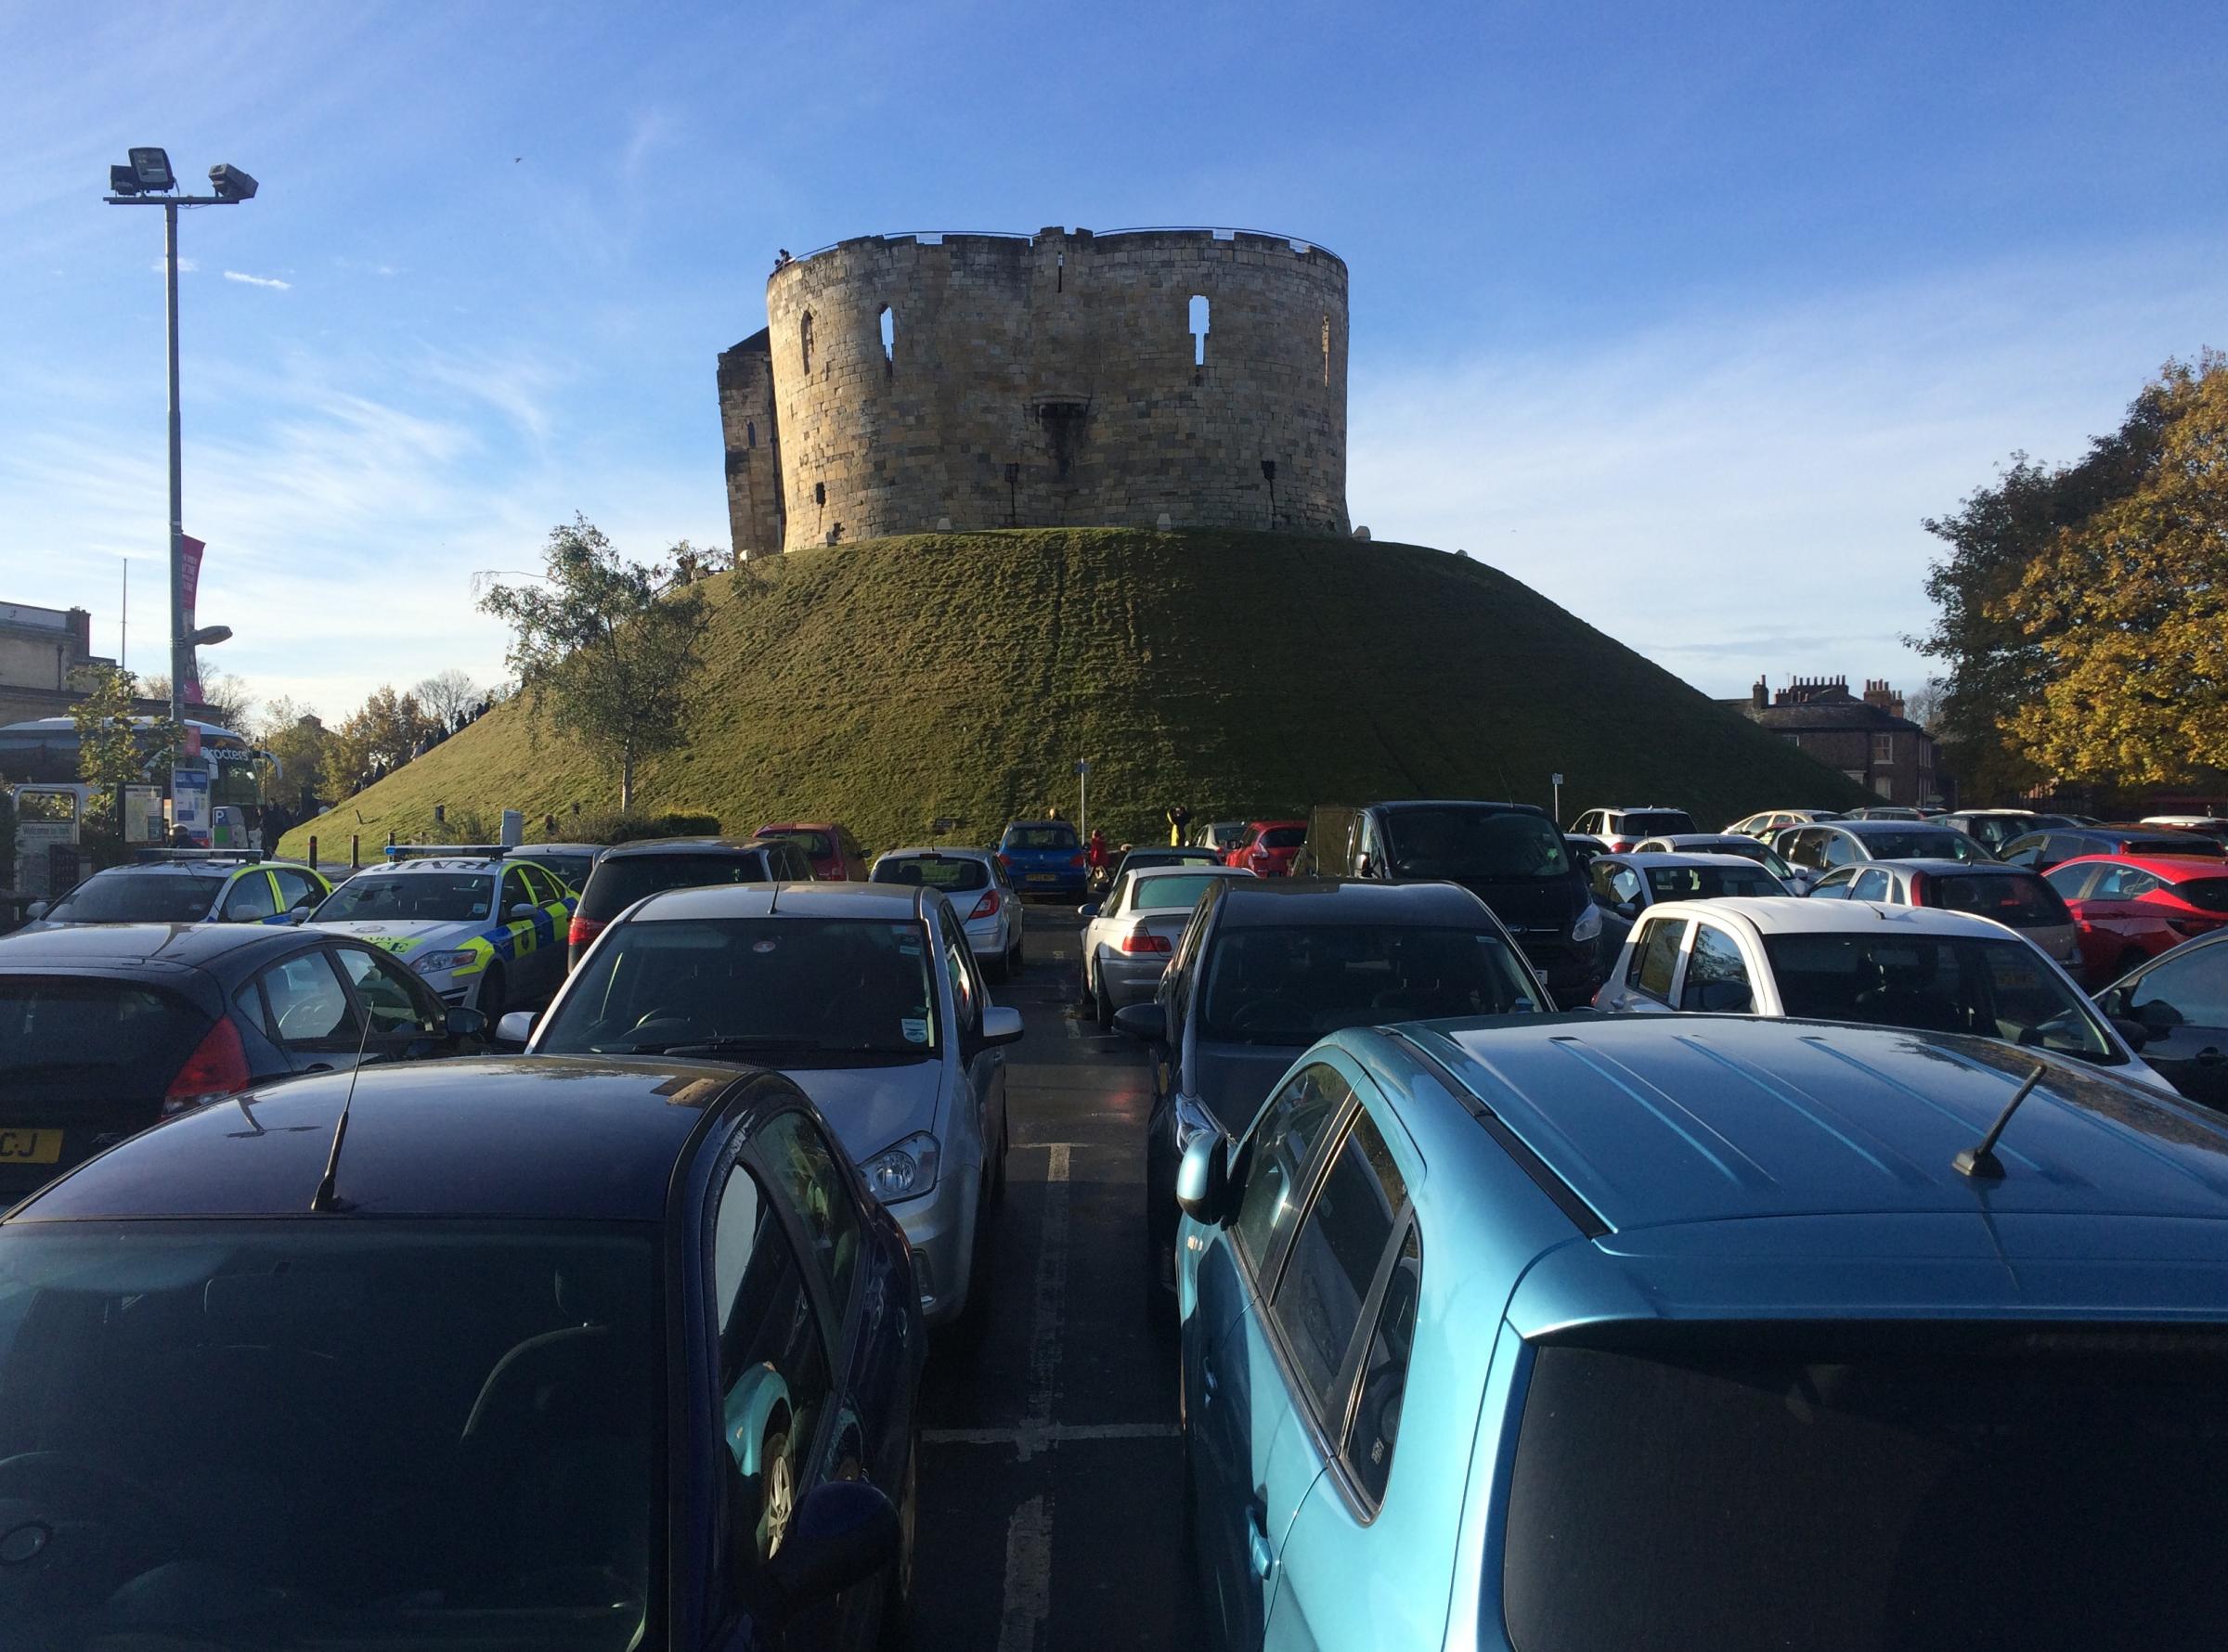 Yobs attack car in Castle car park